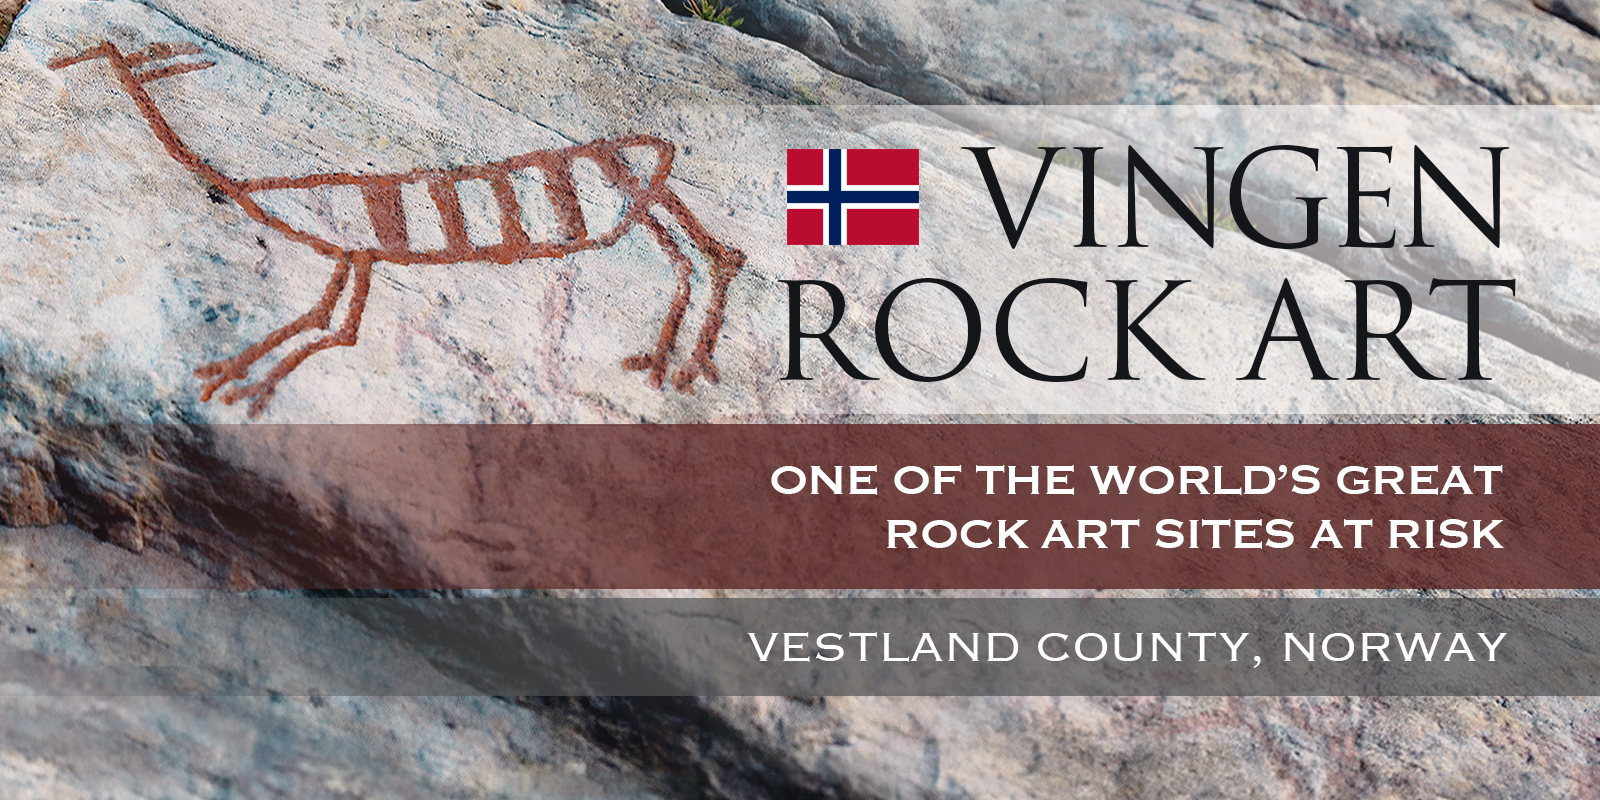 ICOMOS International Scientific Committee on Rock Art Norway Vingen rock art petroglyphs at risk